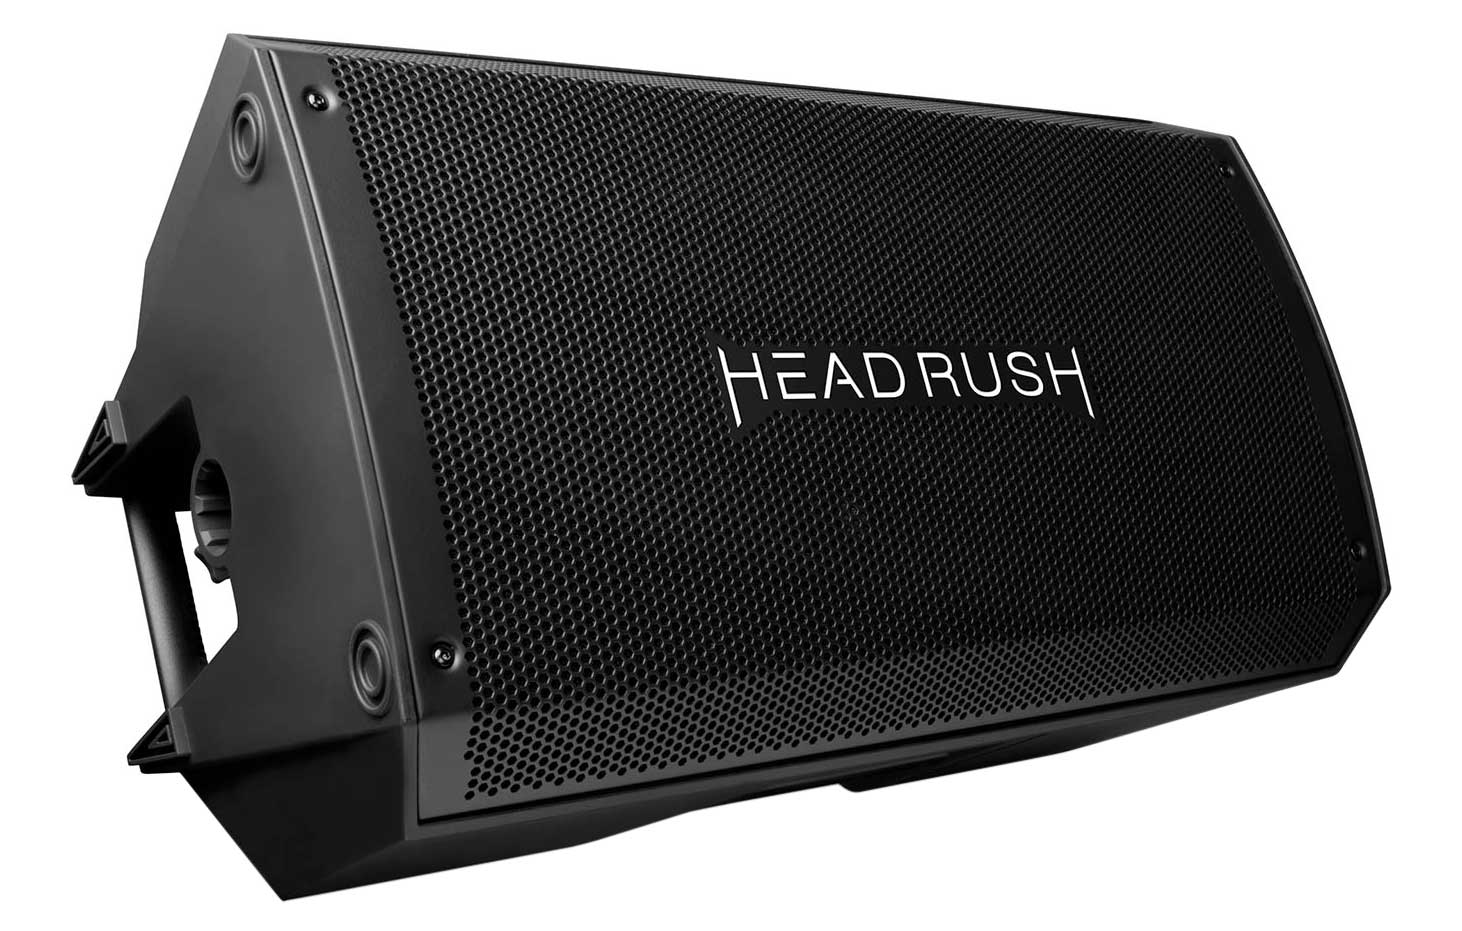 HeadRush FRFR-108 Guitar Cabinet | guitarguitar